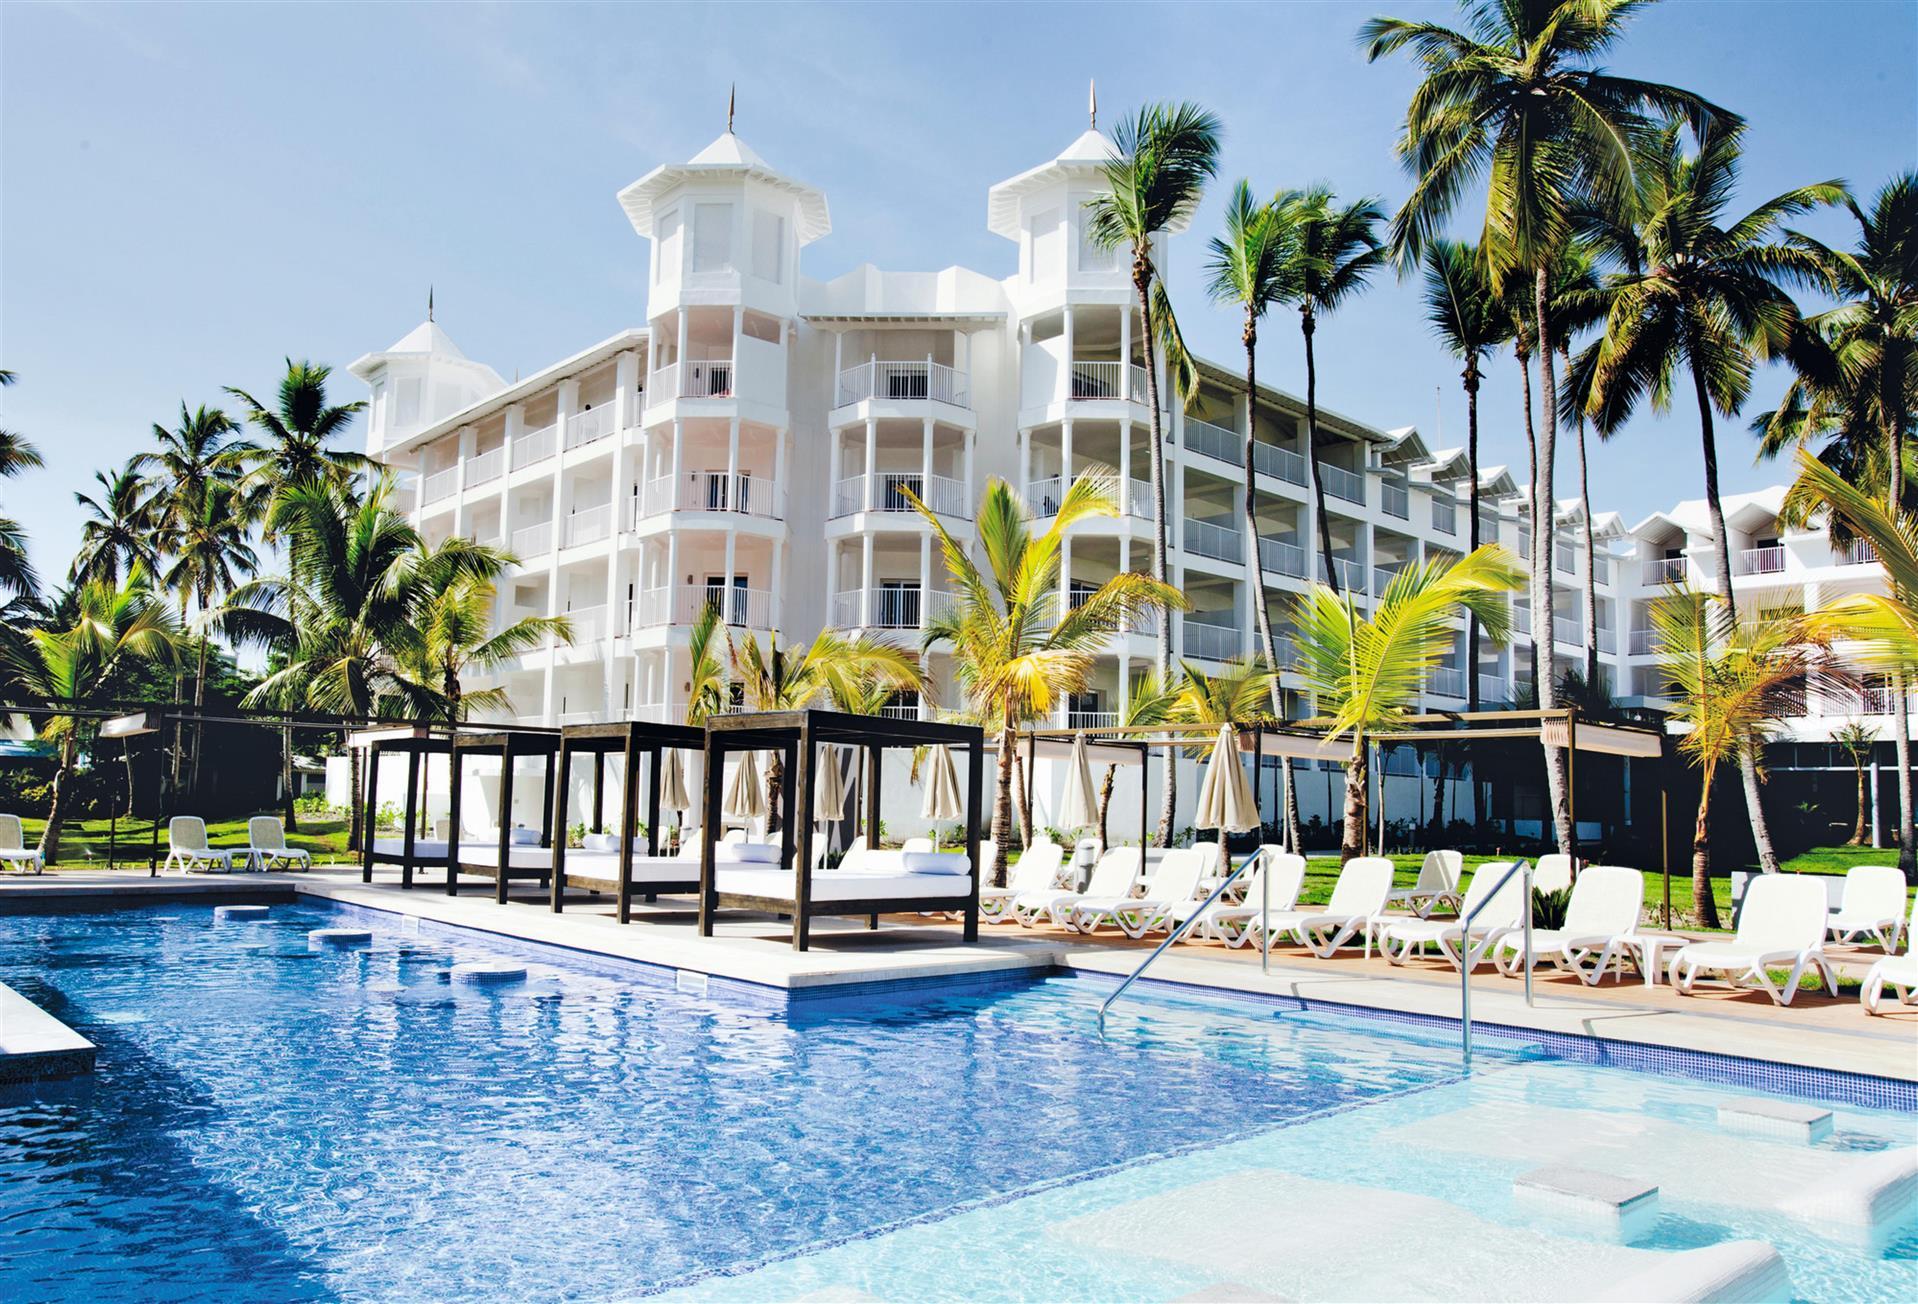 Hotel Riu Palace Mexico in Playa del Carmen, MX